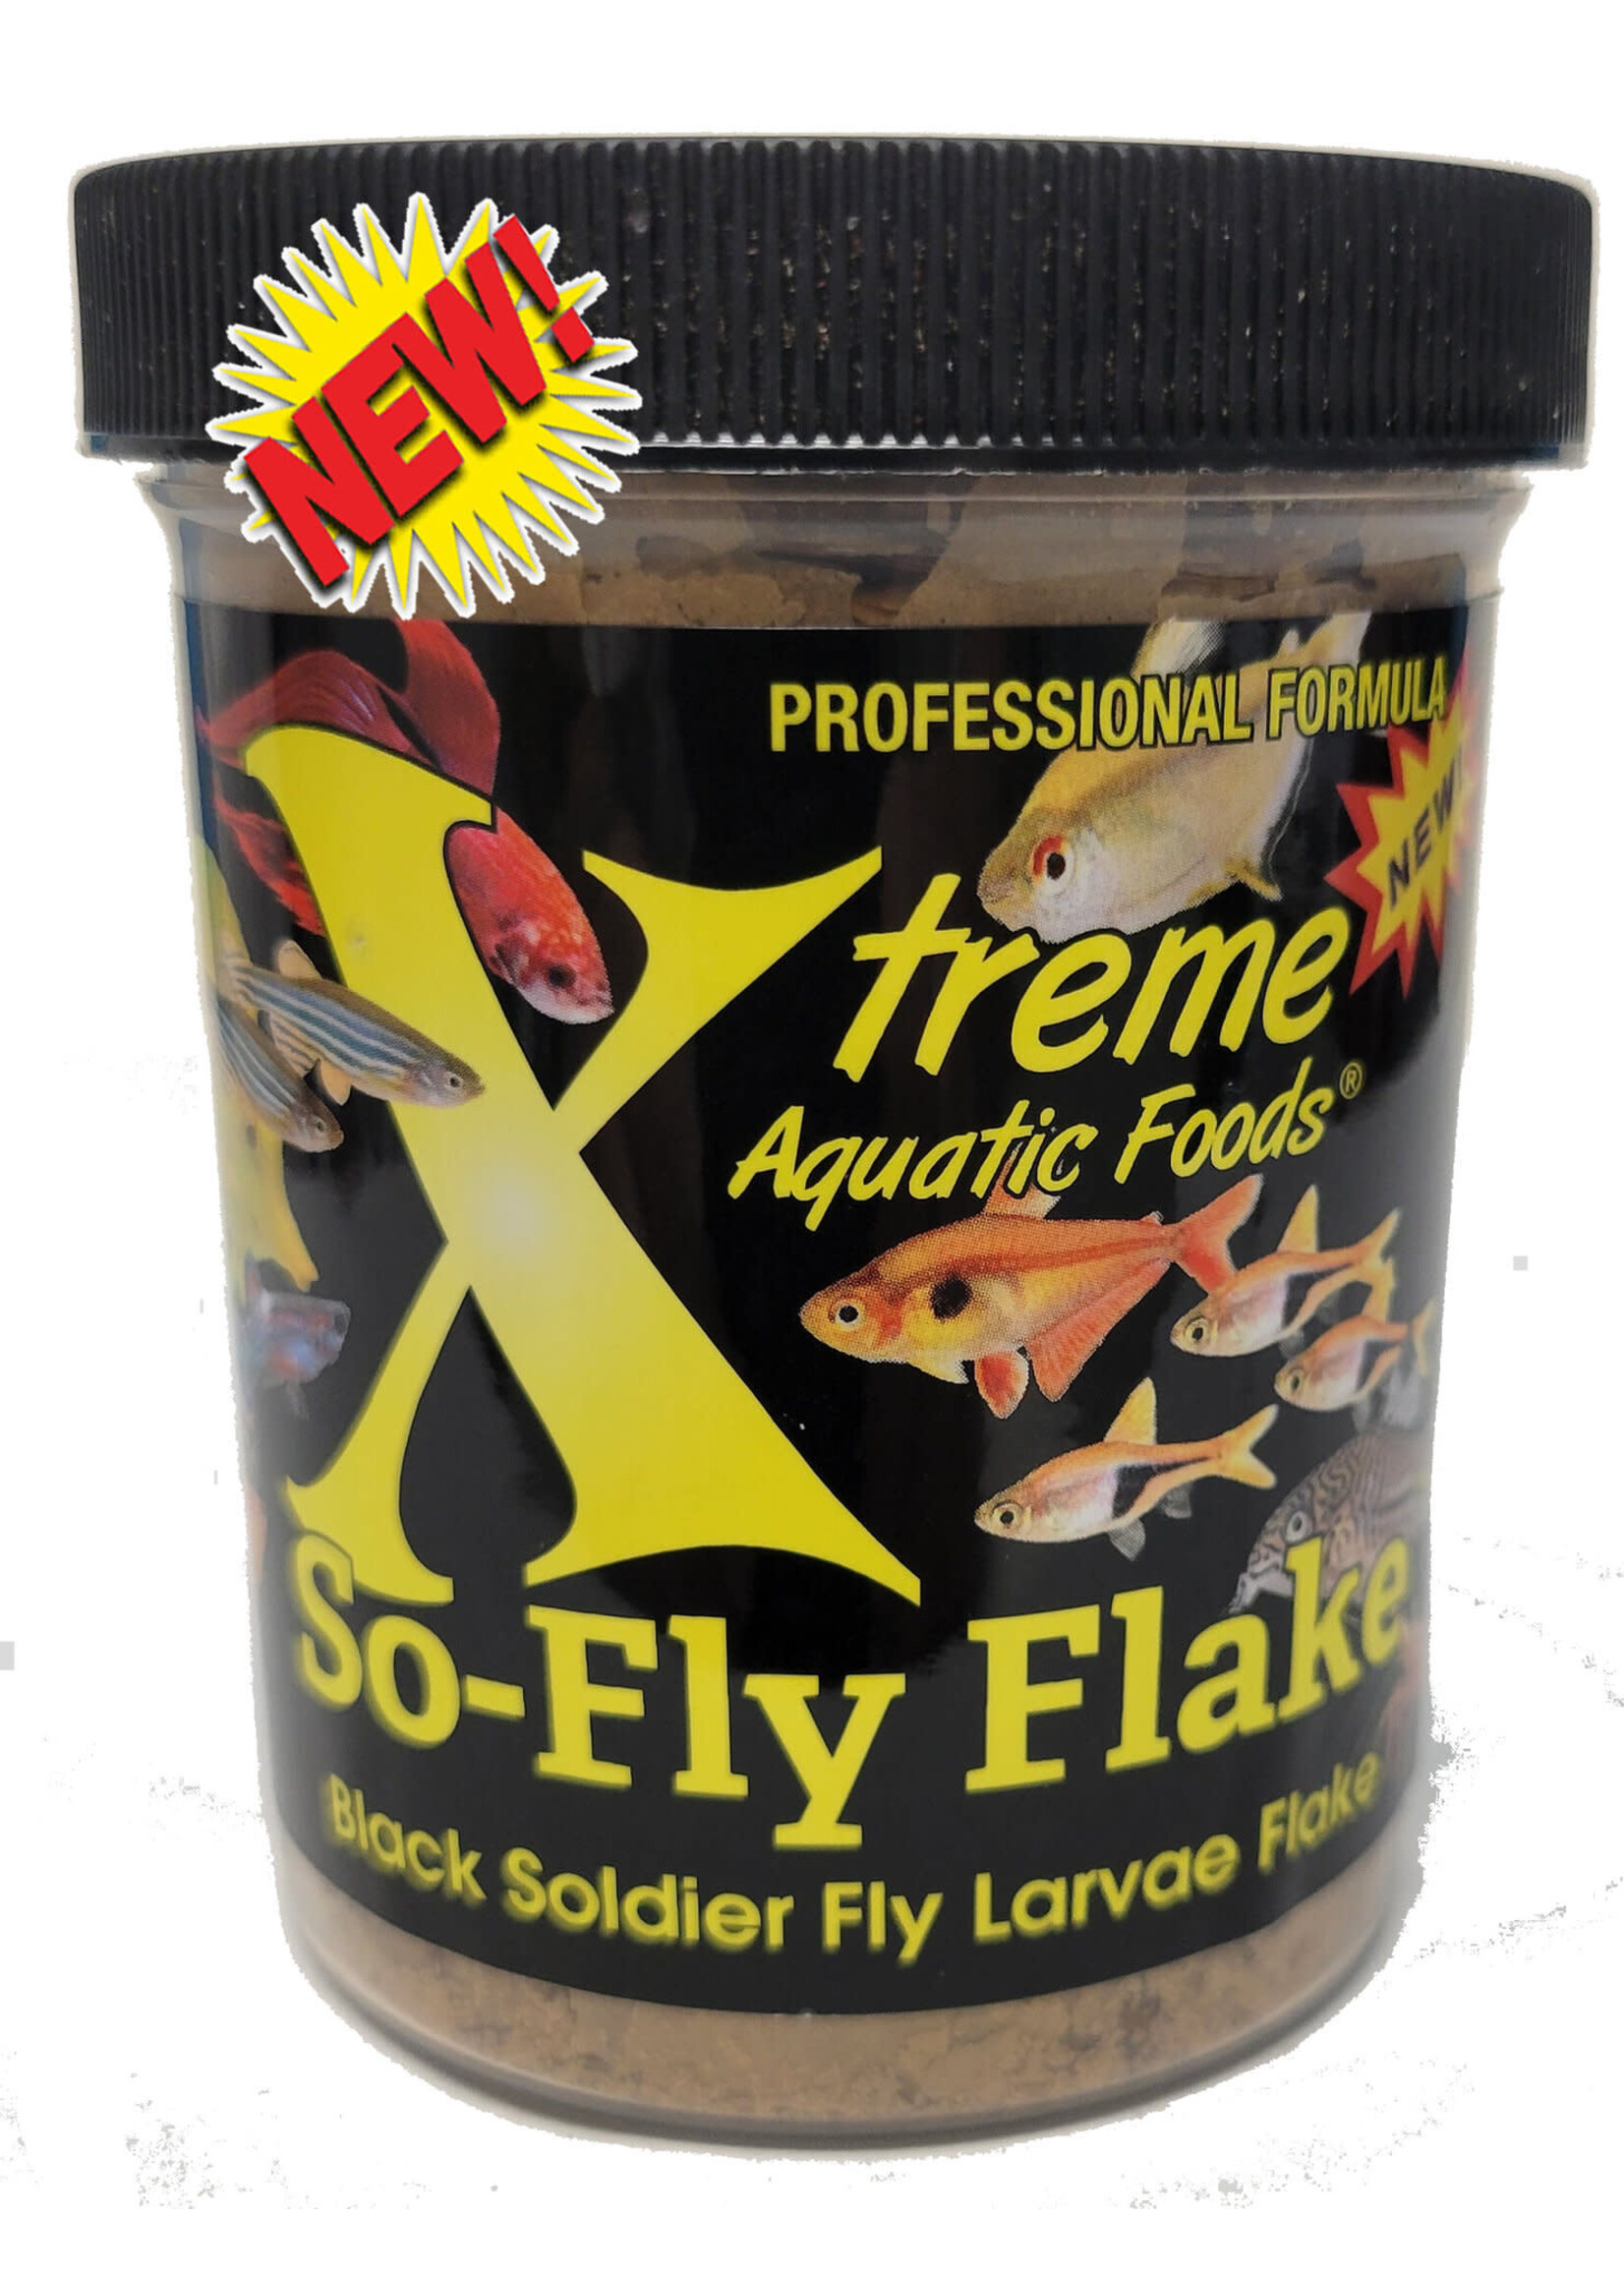 Xtreme Aquatics Food SOFLY BLACK SOLDIER FLY LARVAE FLAKE 05 OZ